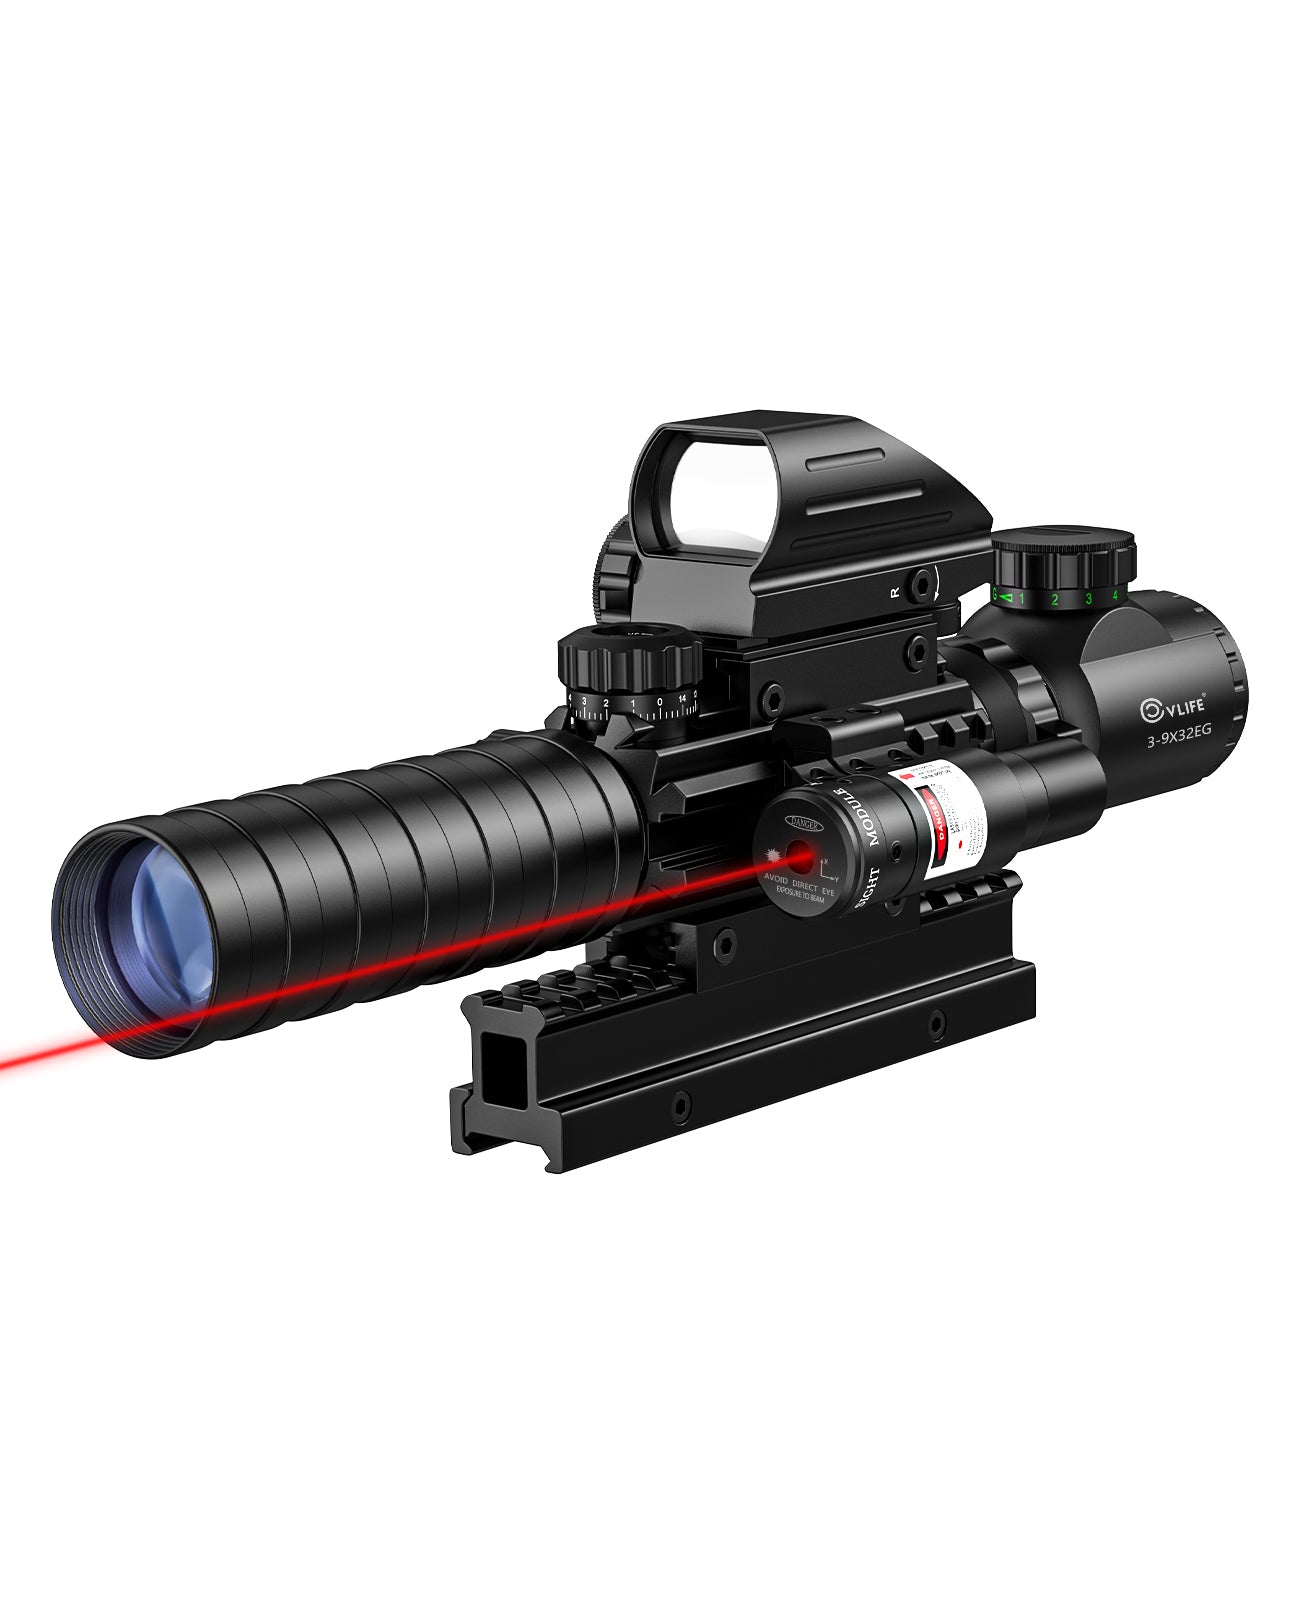 3-10x42 Red Laser Riflescope Sight Telescopic Optics Reflex Rifle Scope  Airsoft